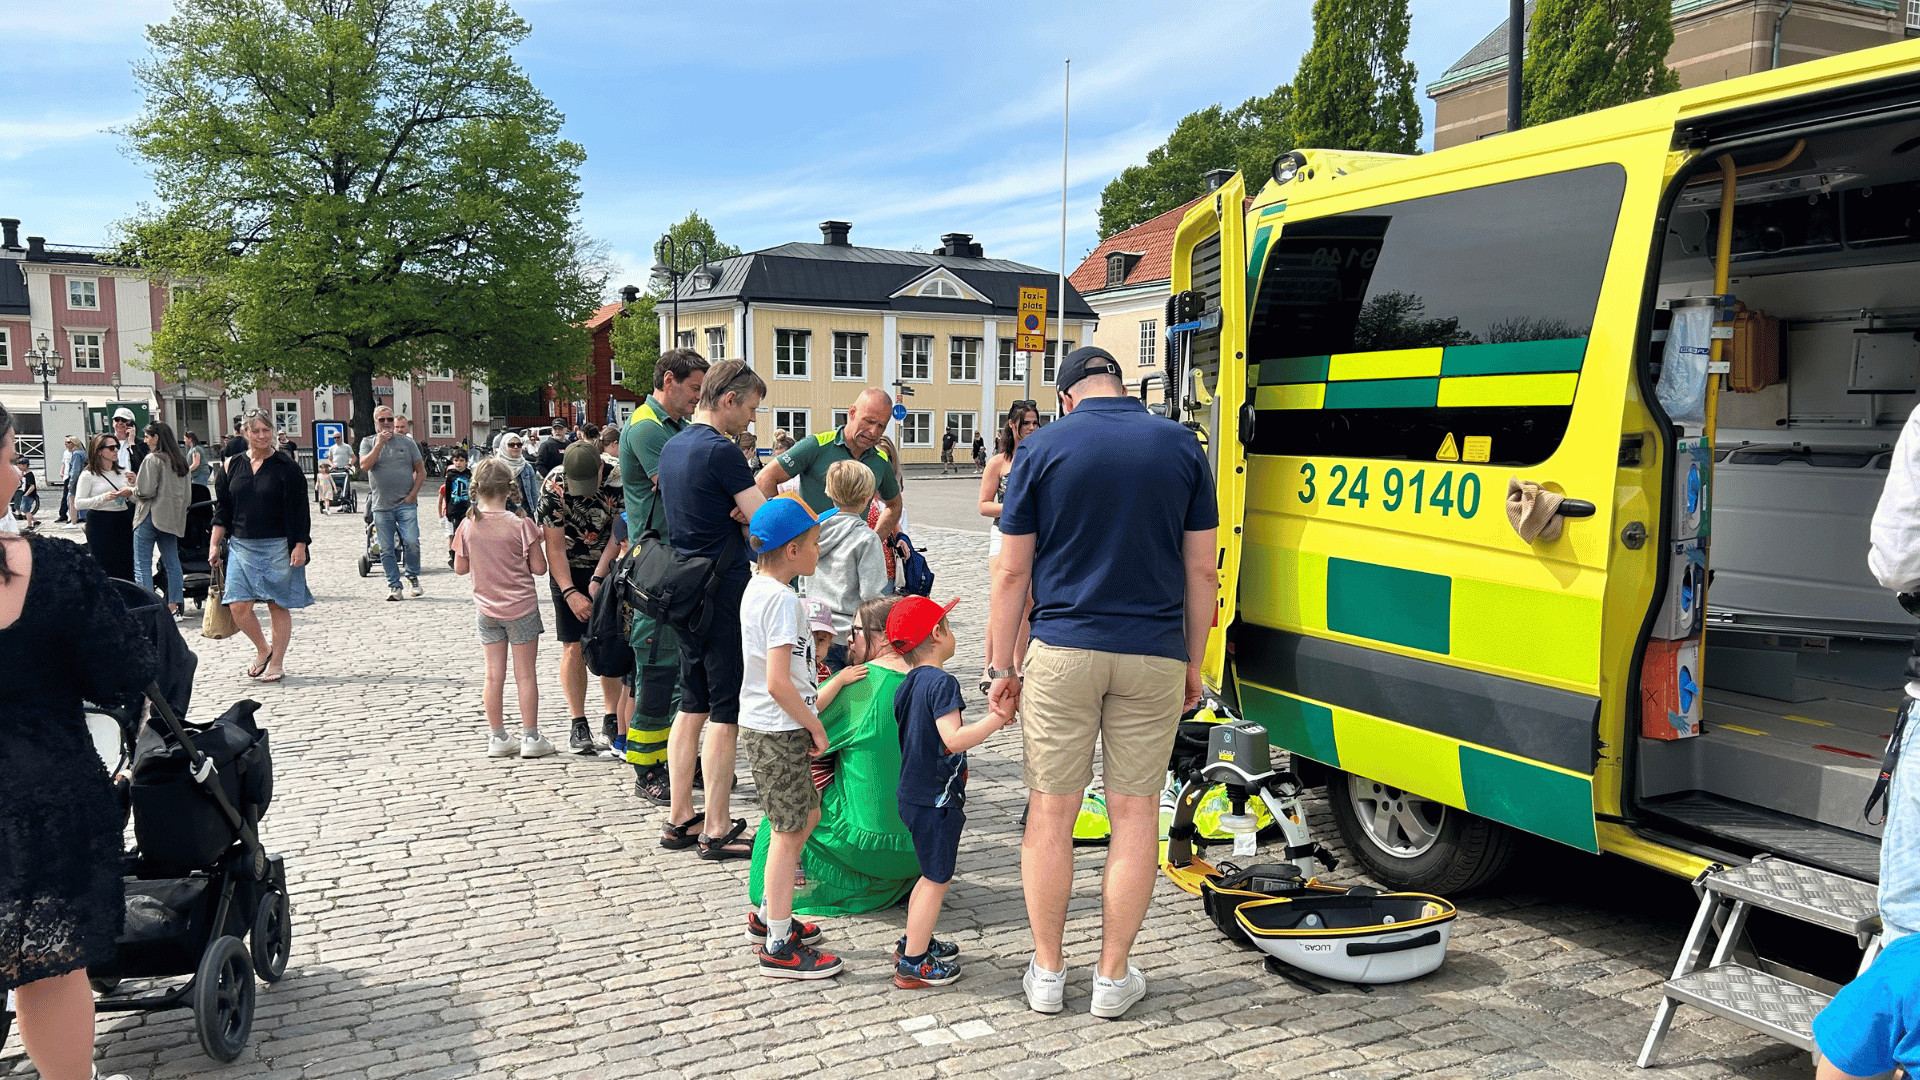 vasteras-barnfest-ambulans-barn-publik